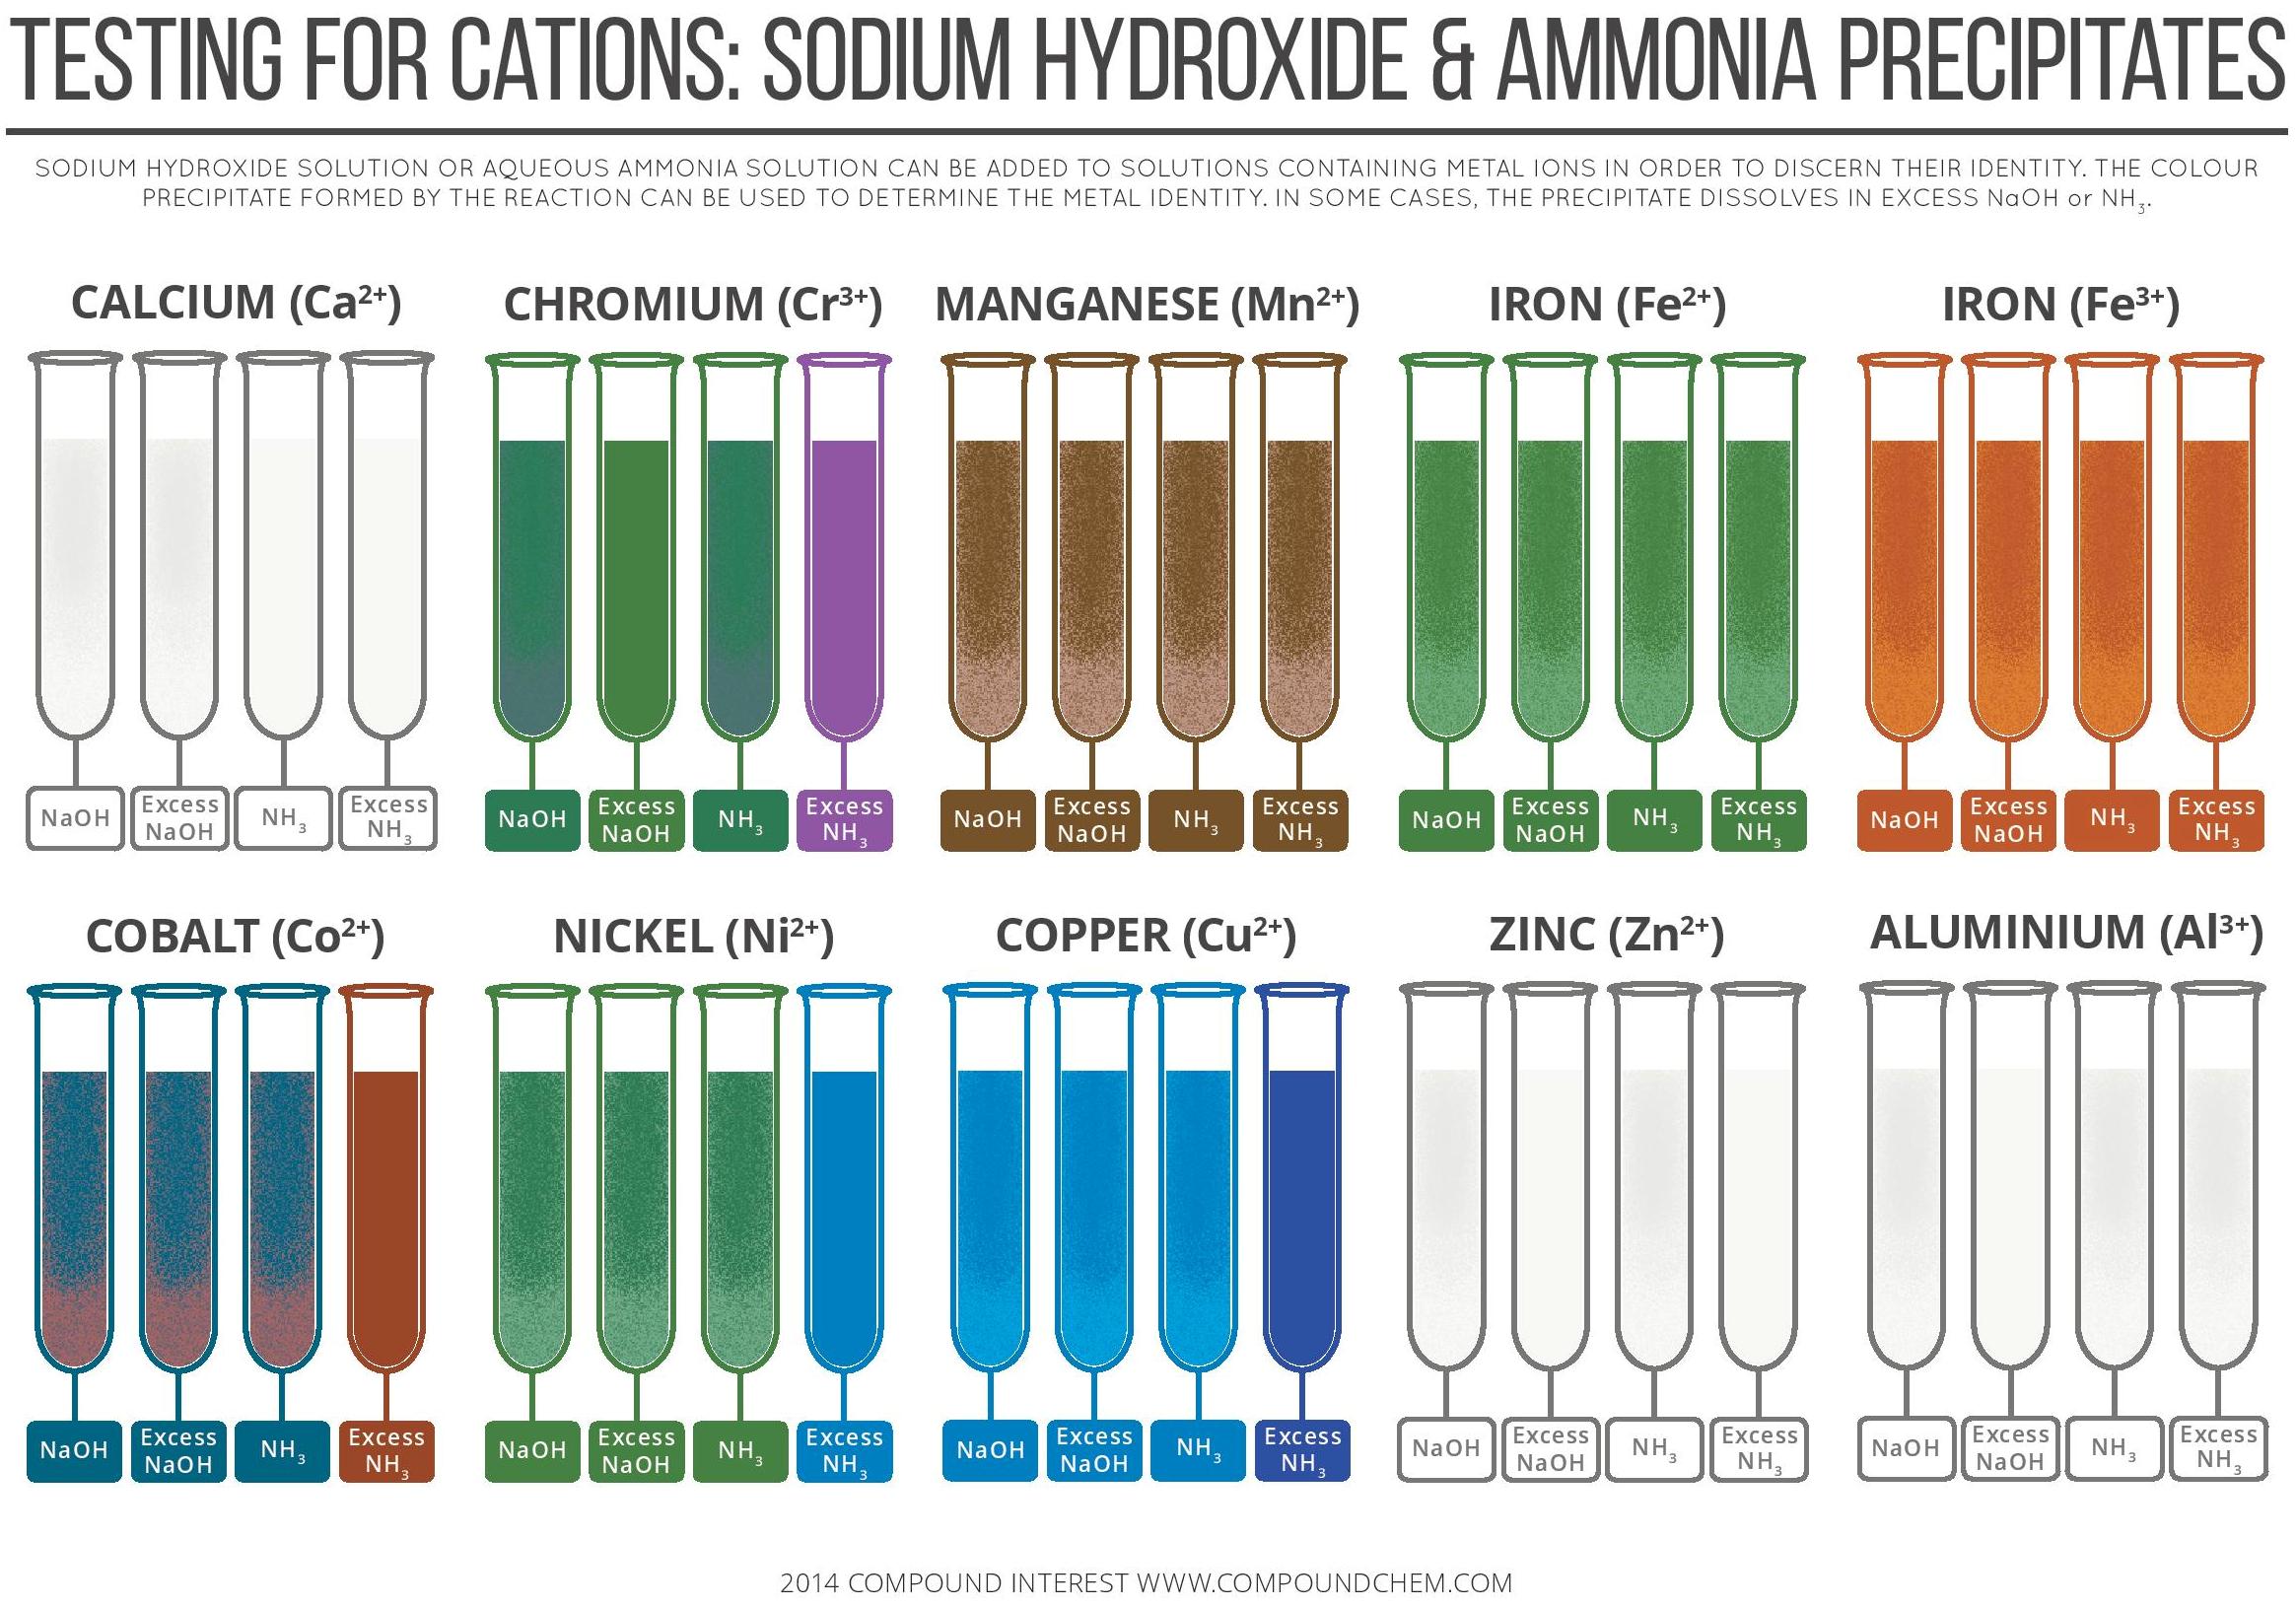 Testing for Cations By Sodium Hydroxide & Ammonia Precipitates